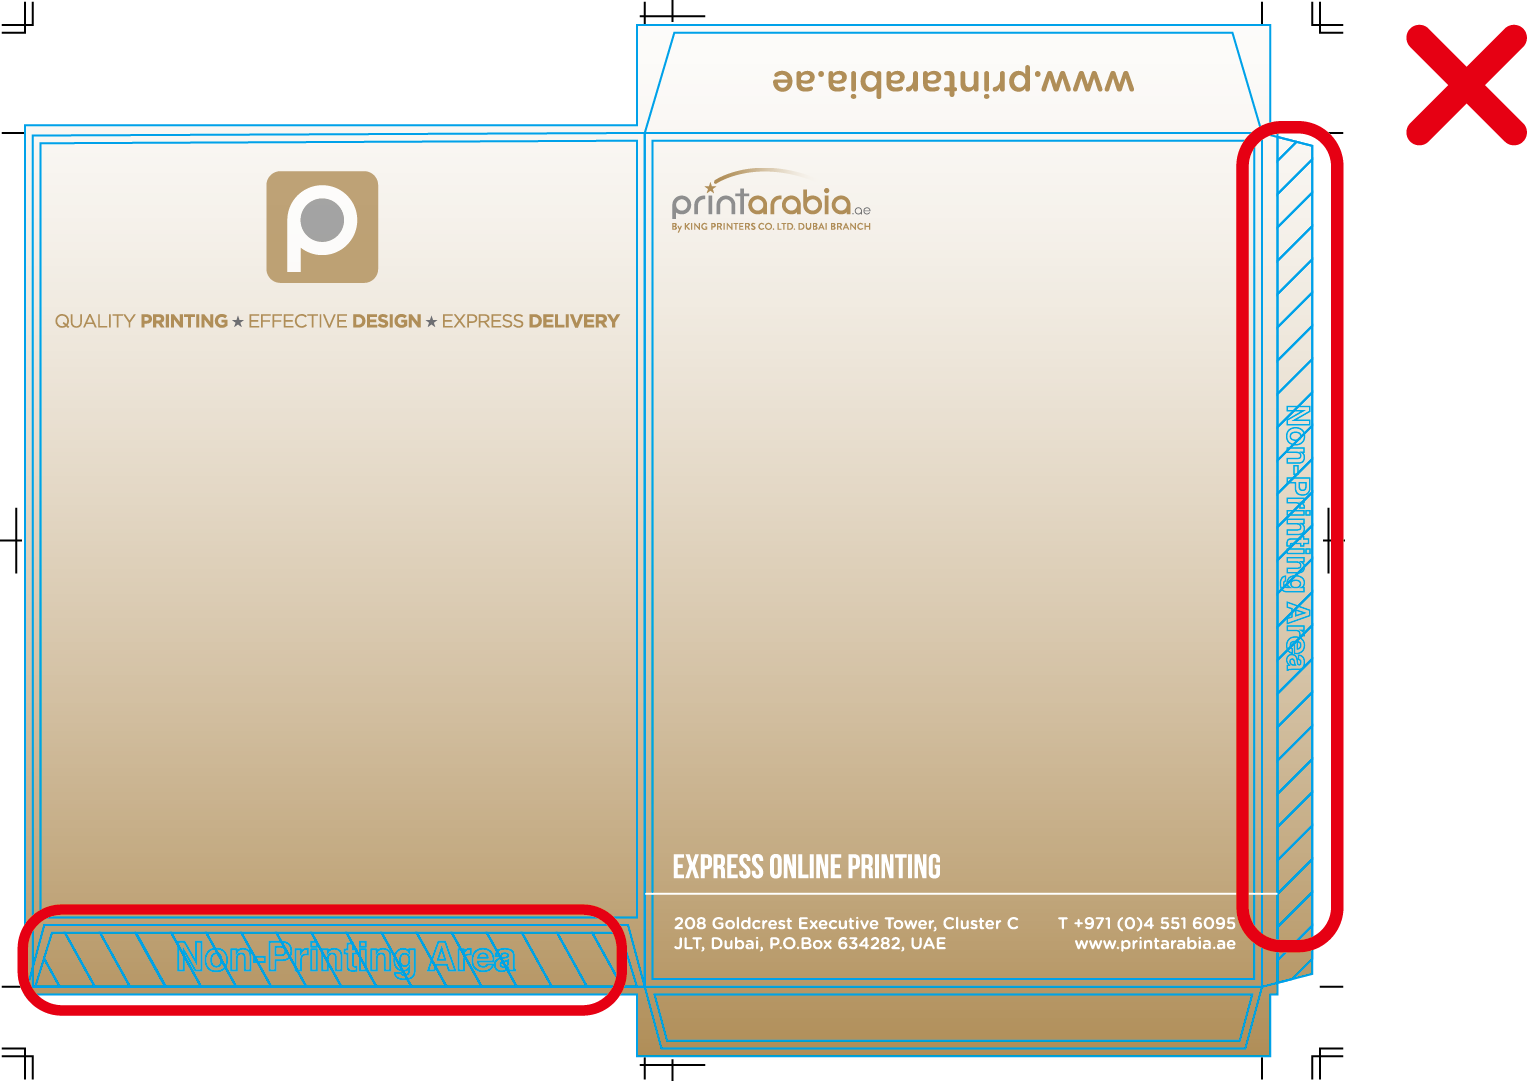 Custom Envelopes - Understanding the envelope templates 02 Image